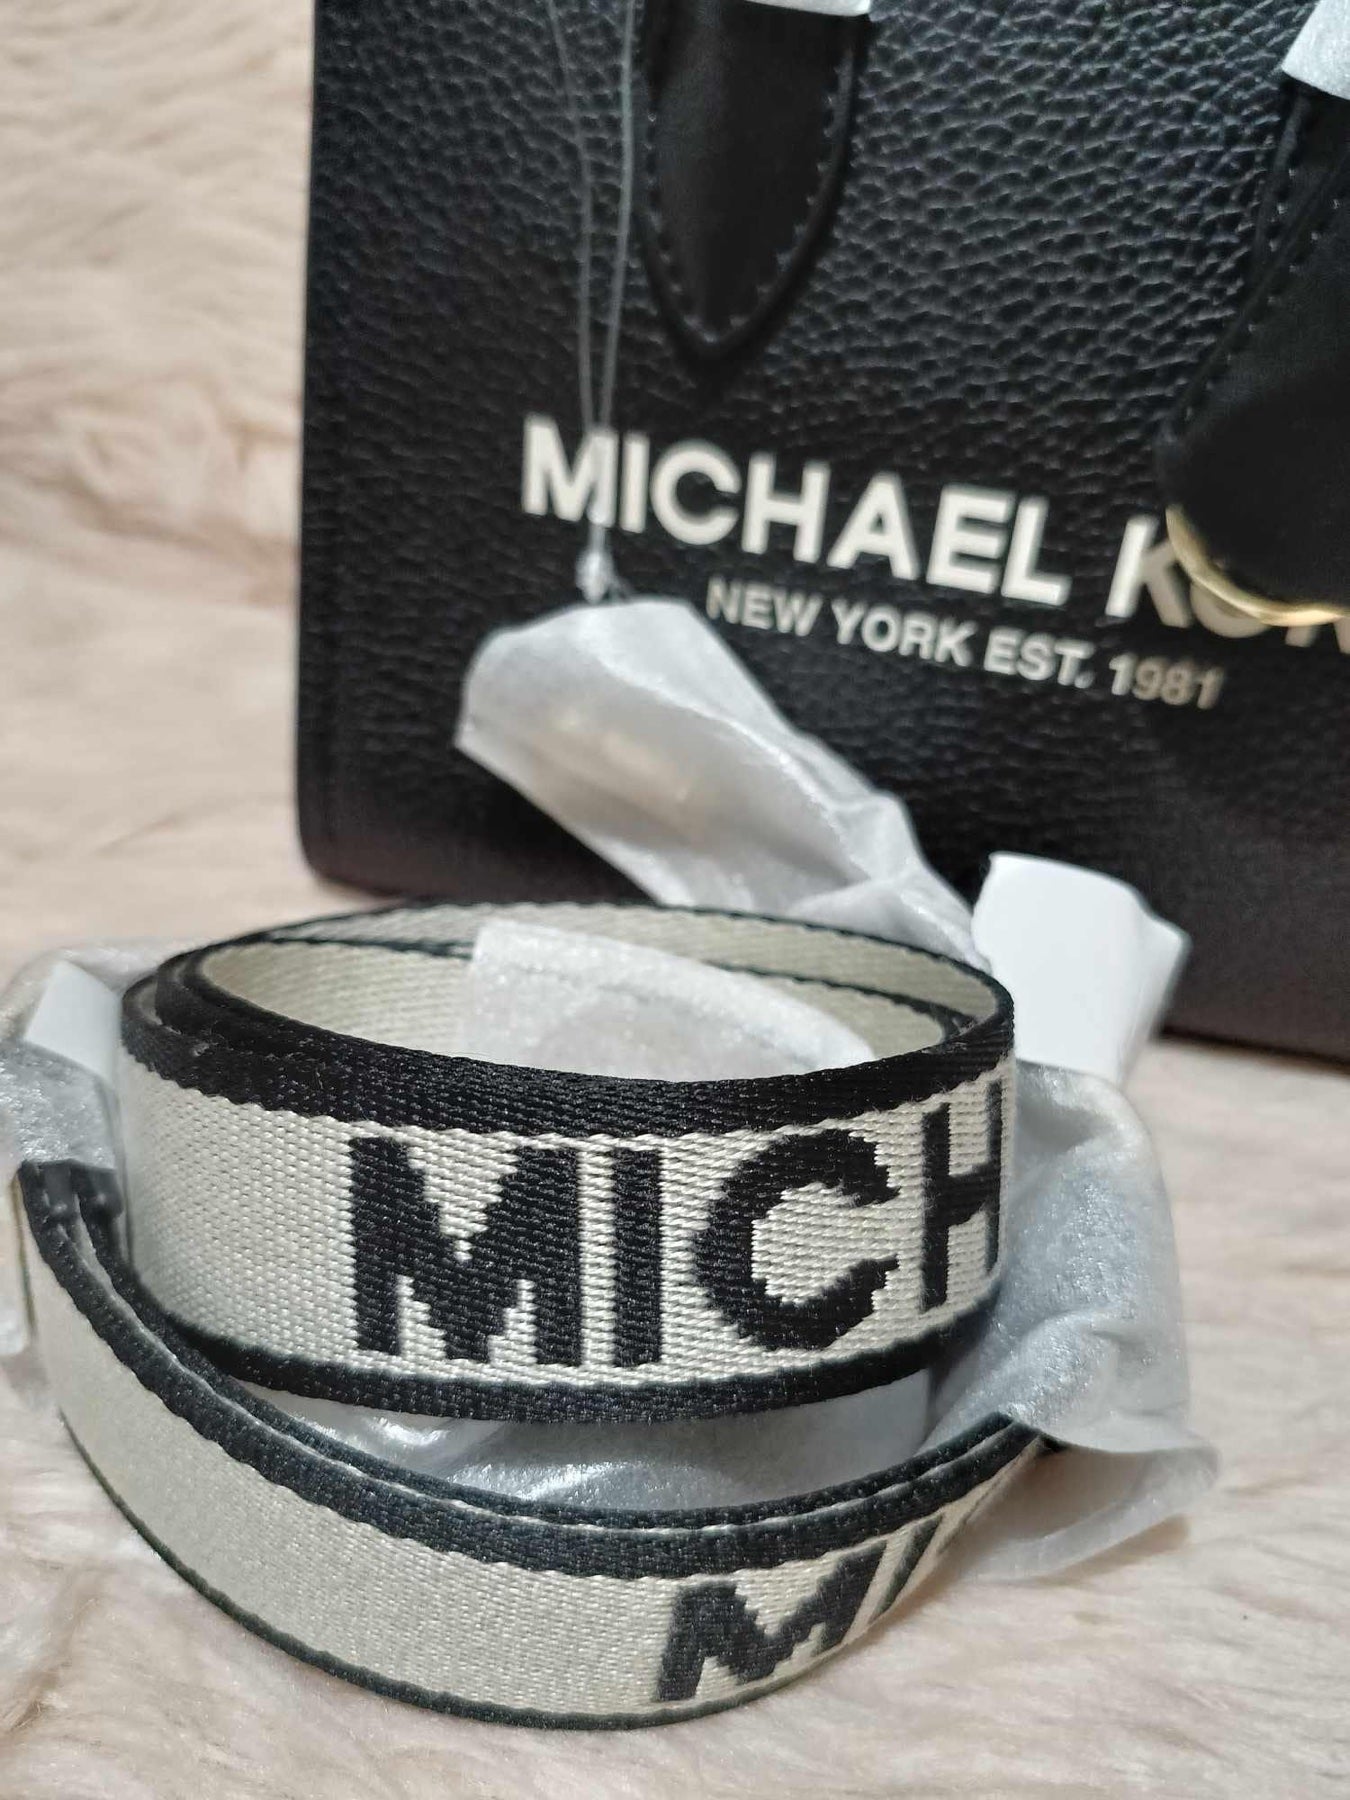 AUTHENTIC/ORIGINAL Michael Kors MK Mirella Small Shopper Tote Crossbody Leather Bag Black